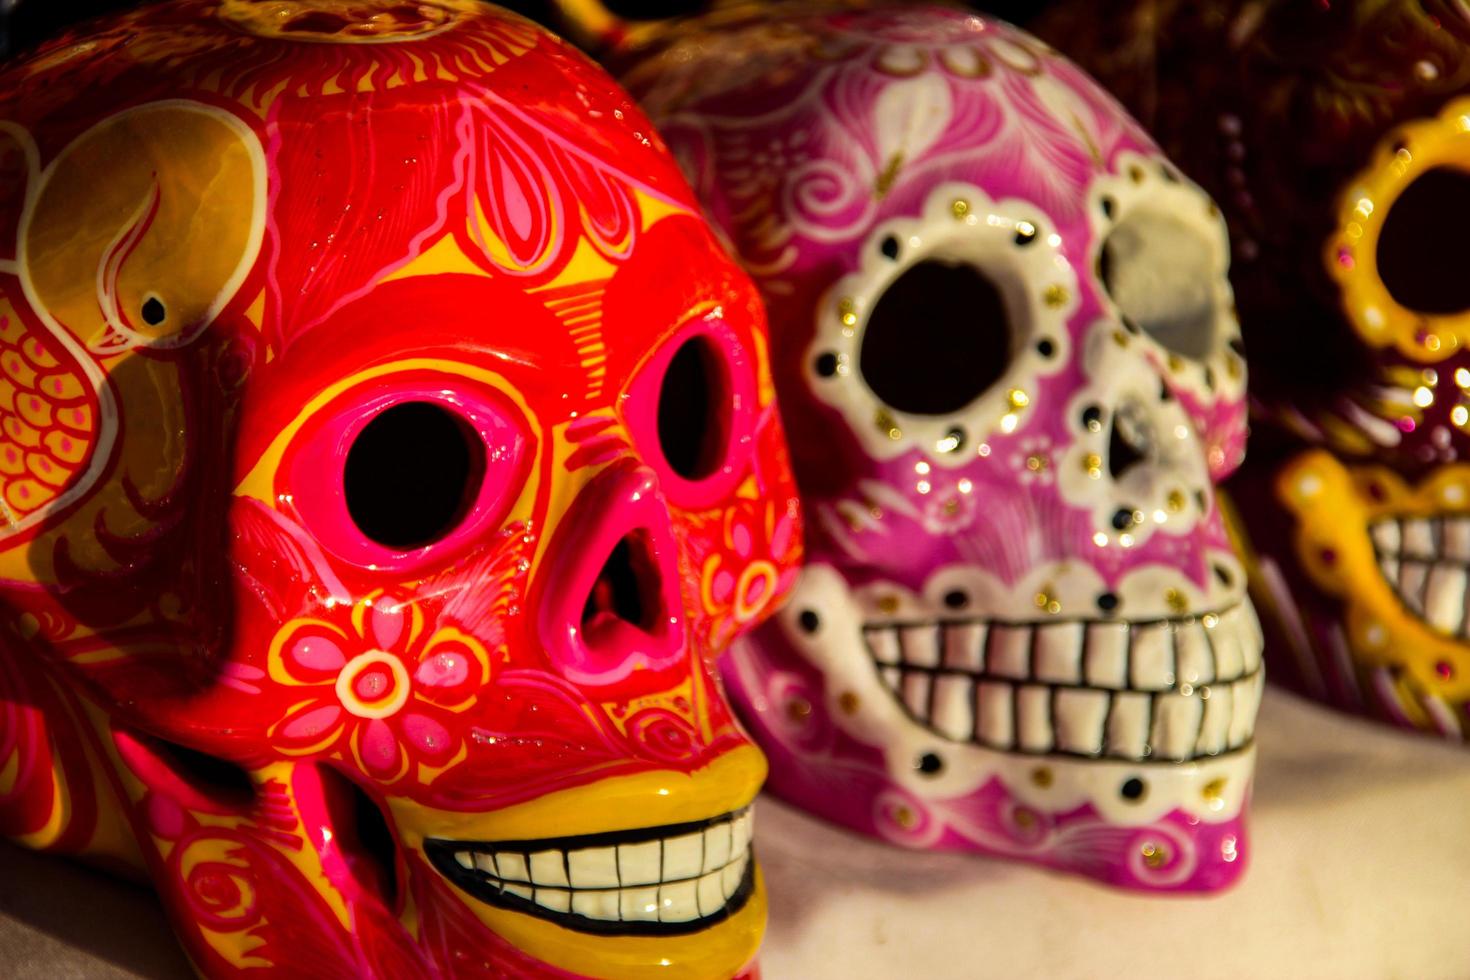 cabo san lucas, méxico, 8 de agosto de 2014 - calacas, máscaras de caveira de madeira do dia dos mortos no mercado em cabo san lucas, méxico. máscaras são símbolos típicos que representam calacas - esqueletos. foto